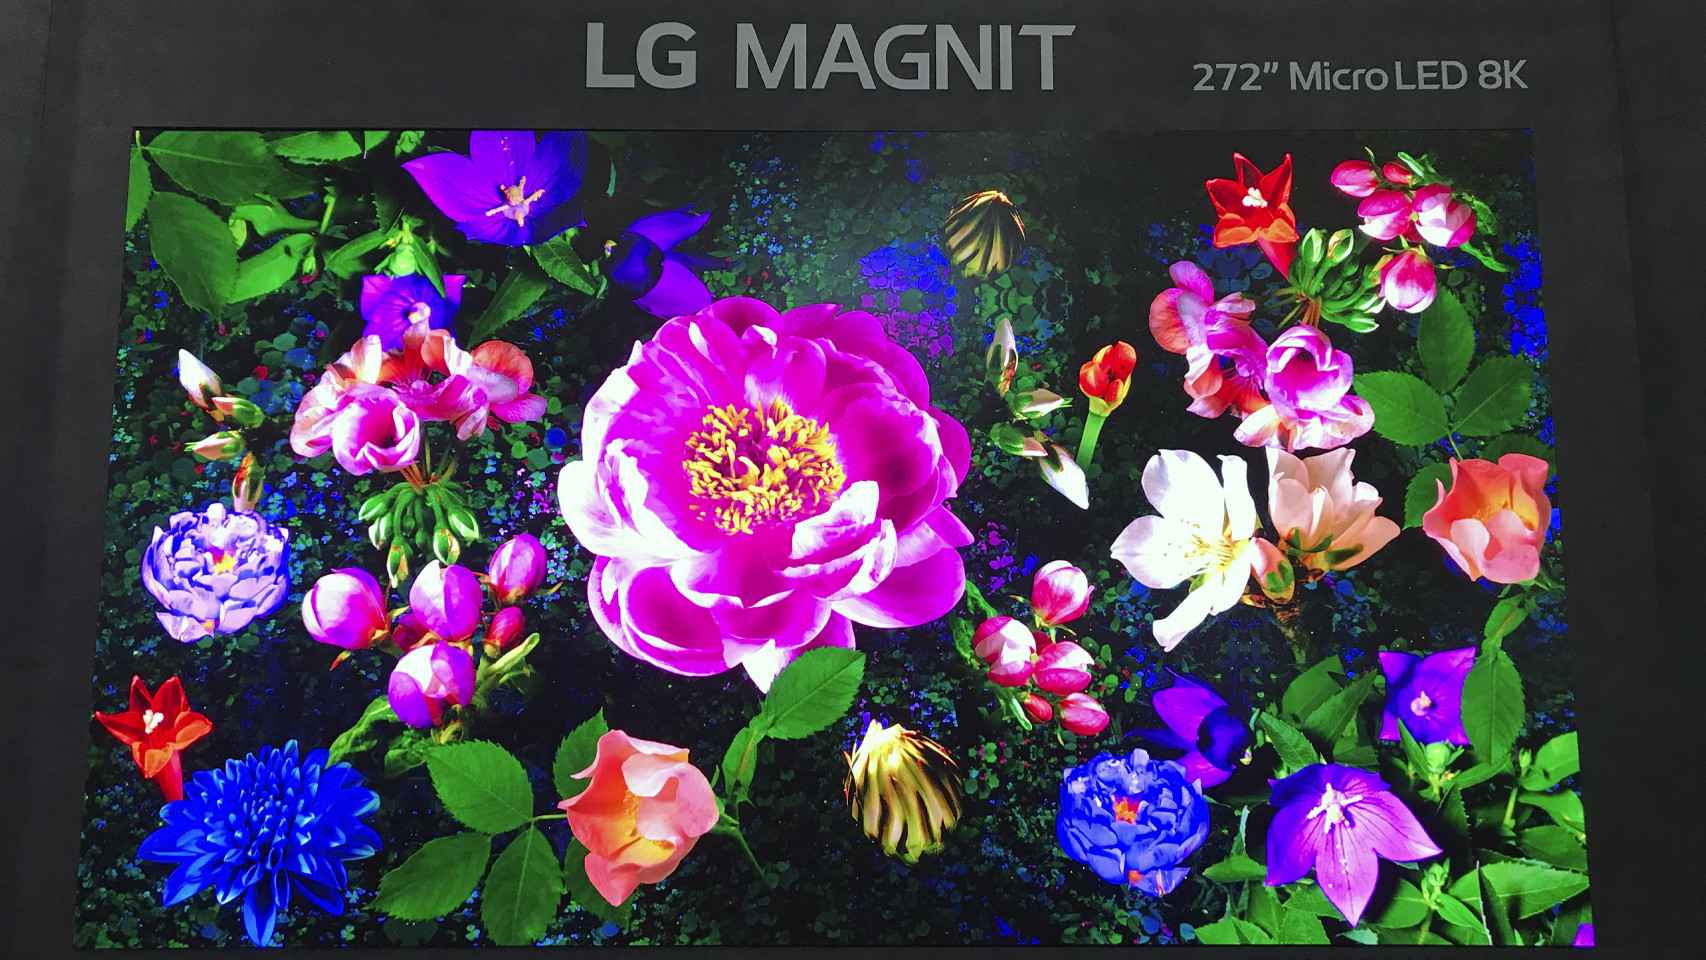 La pantalla LG Magnit 8K Micro LED de 272 pulgadas.